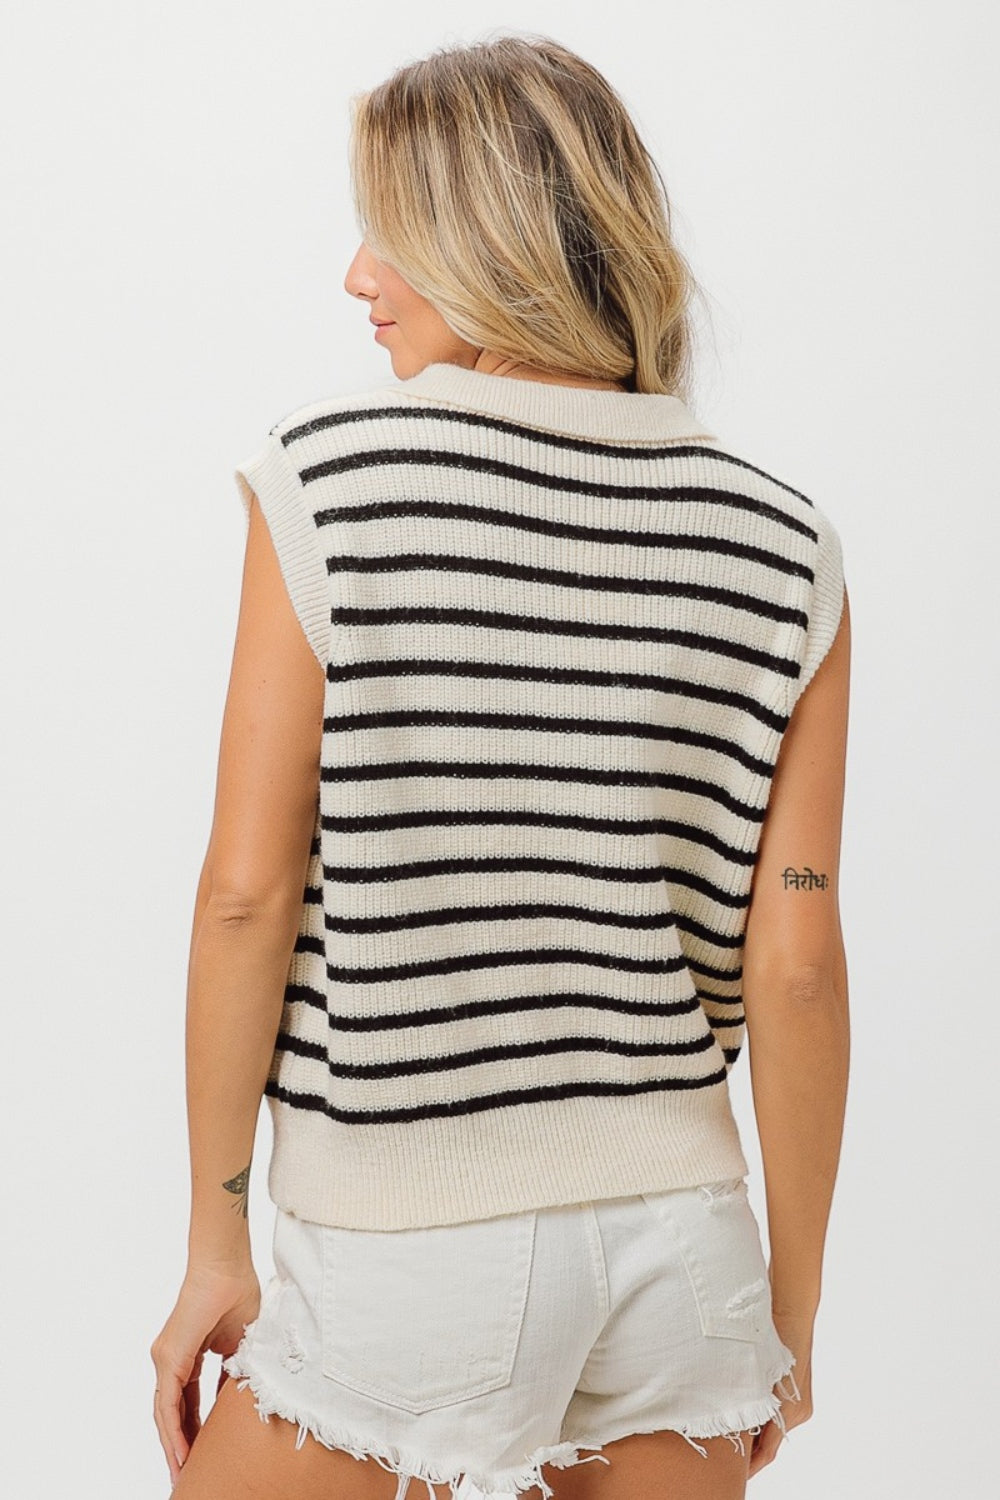 TEEK - Ivory Black Striped Half Button Sweater Top SWEATER TEEK Trend   